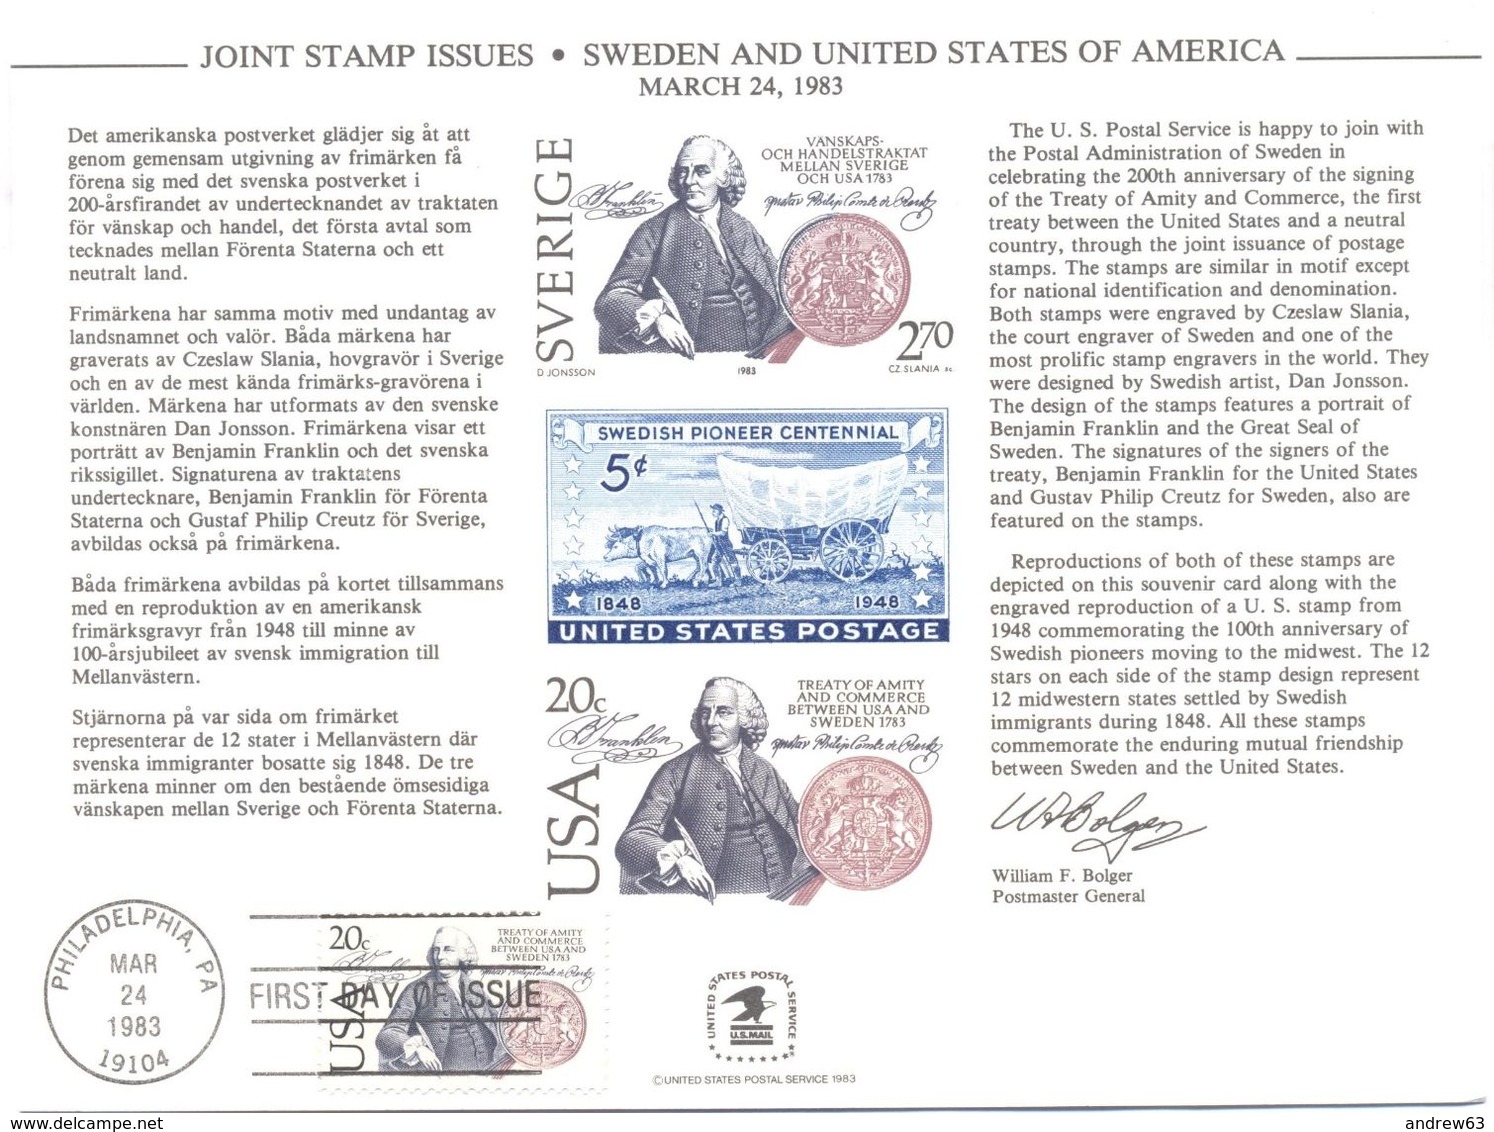 STATI UNITI - USA - 1983 - Cancelled Mint Souvenir Card - Joint Stamp Issues - USA-SWEDEN 200th Ann. Of Treaty - FDC - Cartes Souvenir